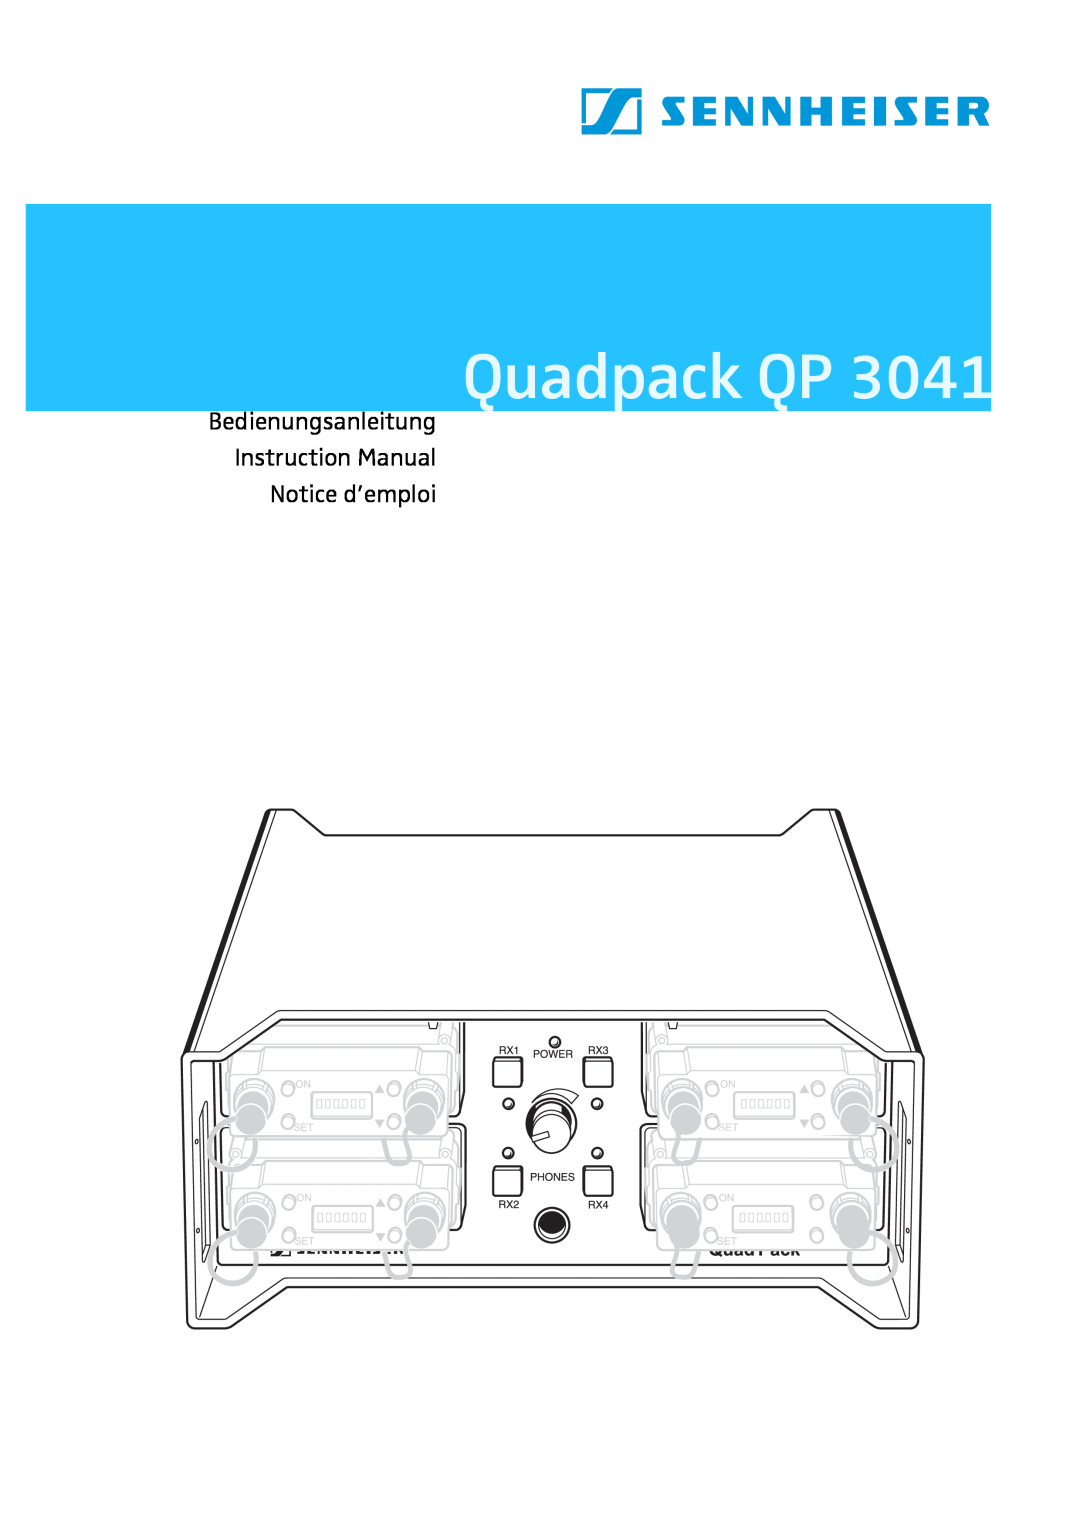 Sennheiser qp 3041 instruction manual Quadpack QP, Notice d’emploi 